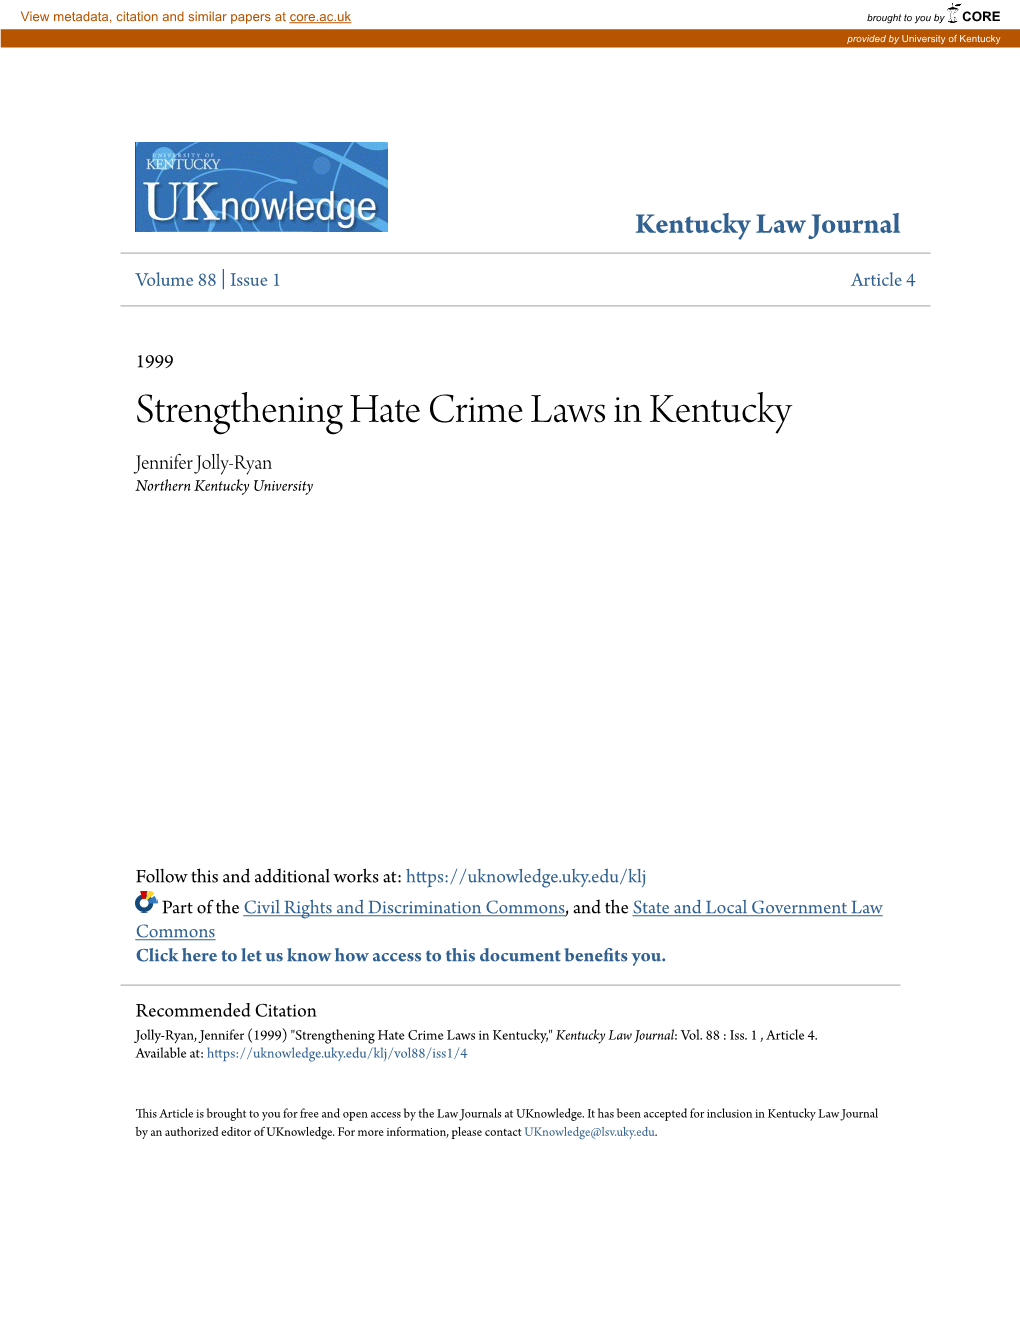 Strengthening Hate Crime Laws in Kentucky Jennifer Jolly-Ryan Northern Kentucky University